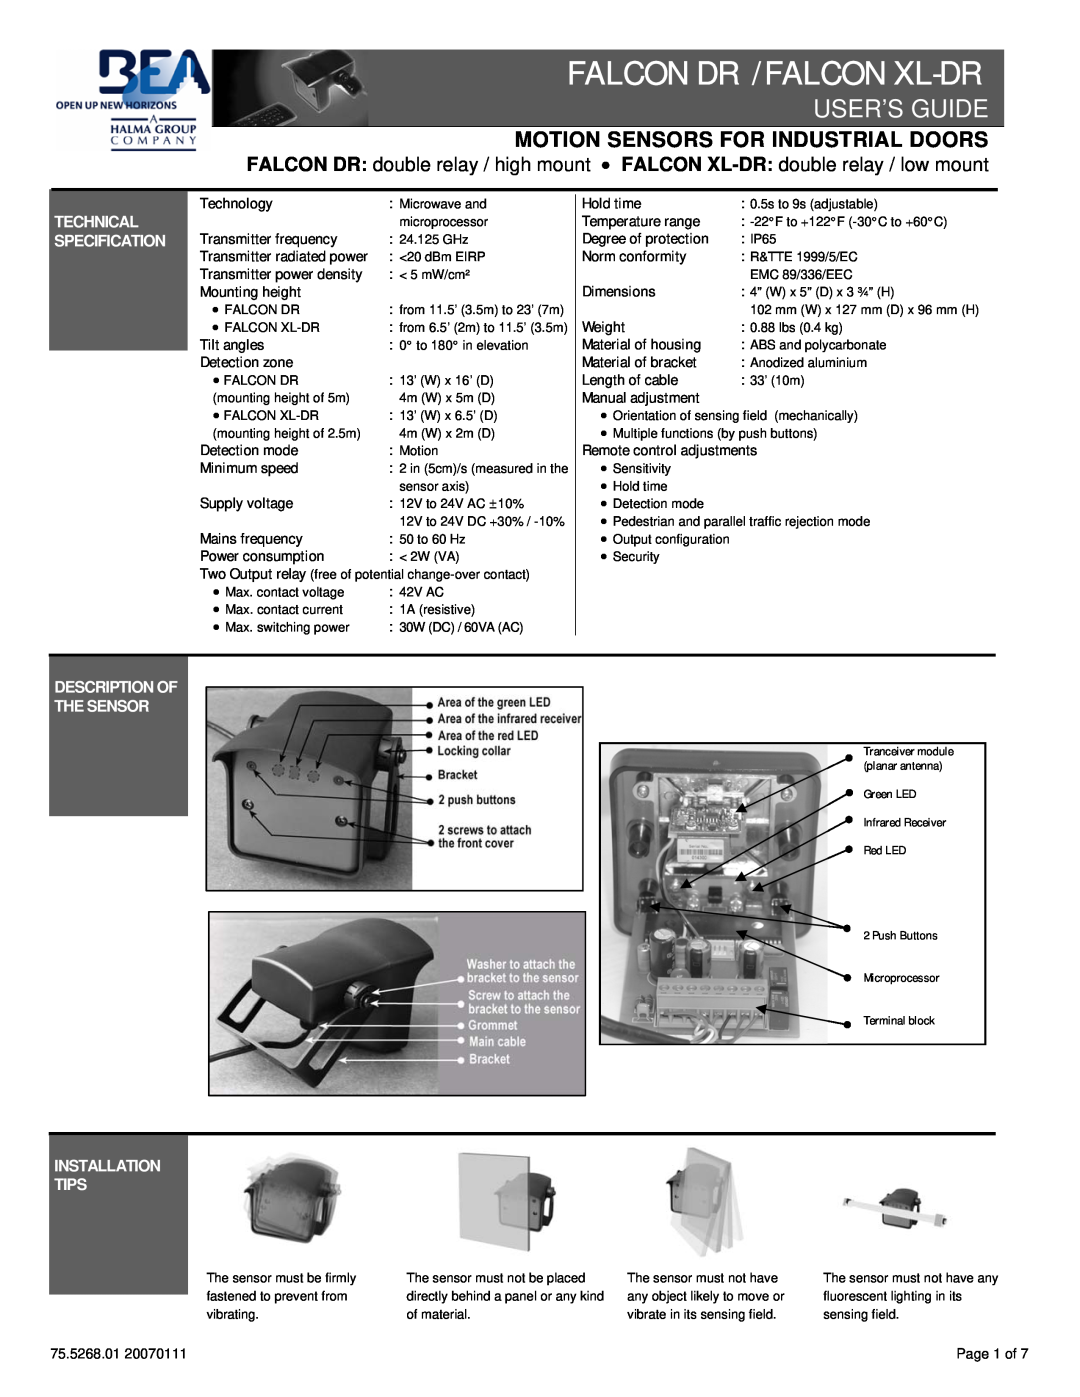 BEA XL-DR dimensions Technical Specification, Description Of The Sensor, Installation Tips, Falcondr /Falconxl-Dr 